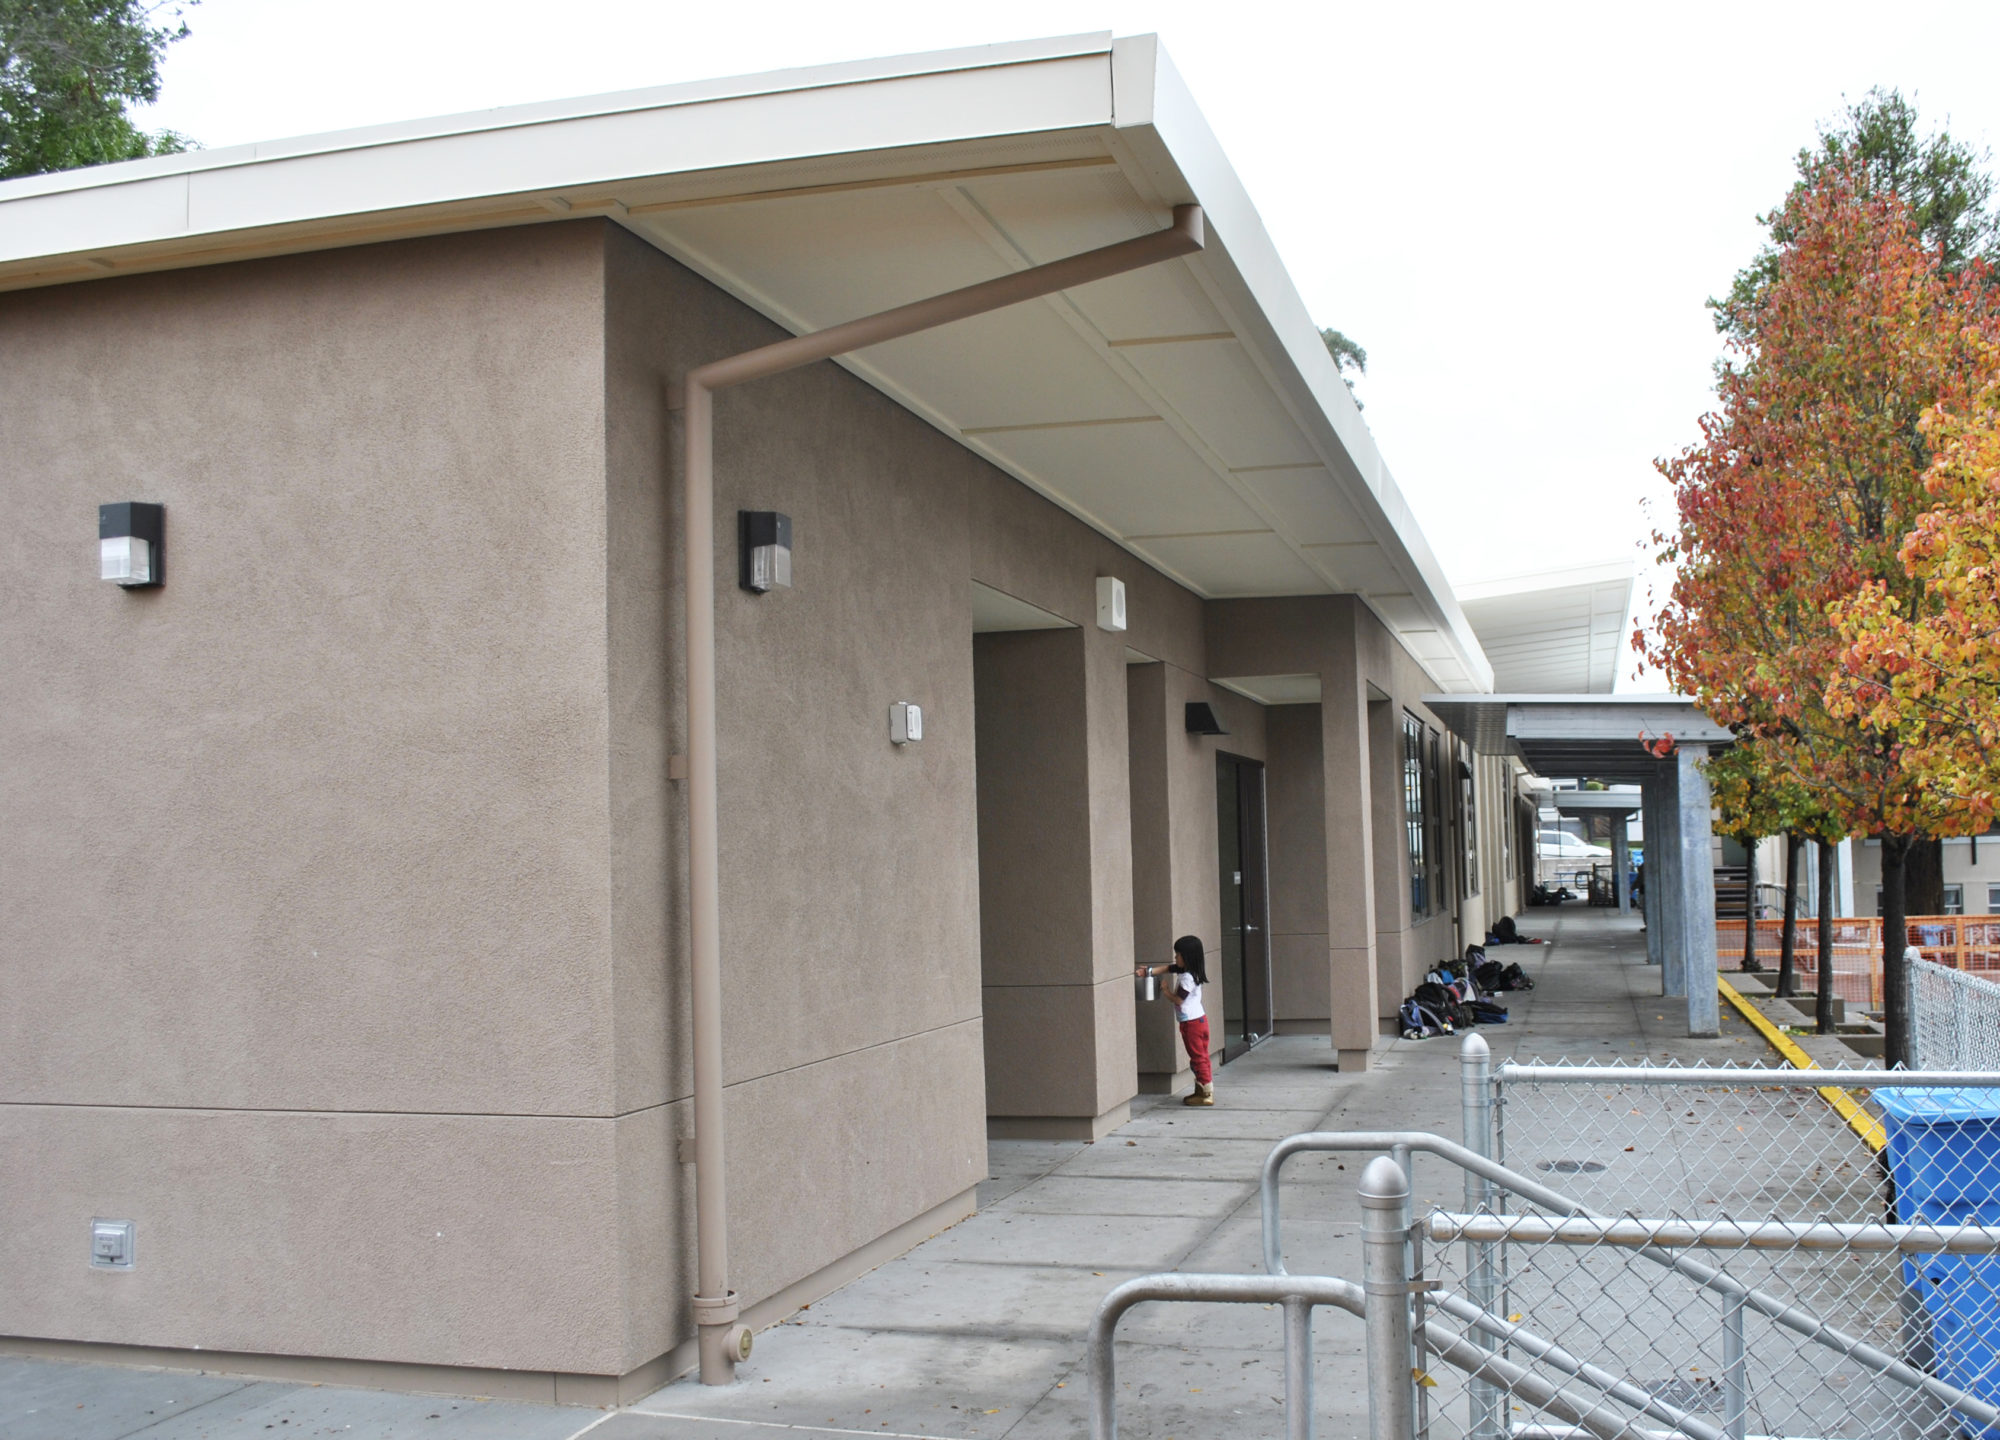 Roosevelt Elementary School Modular Classroom Exterior